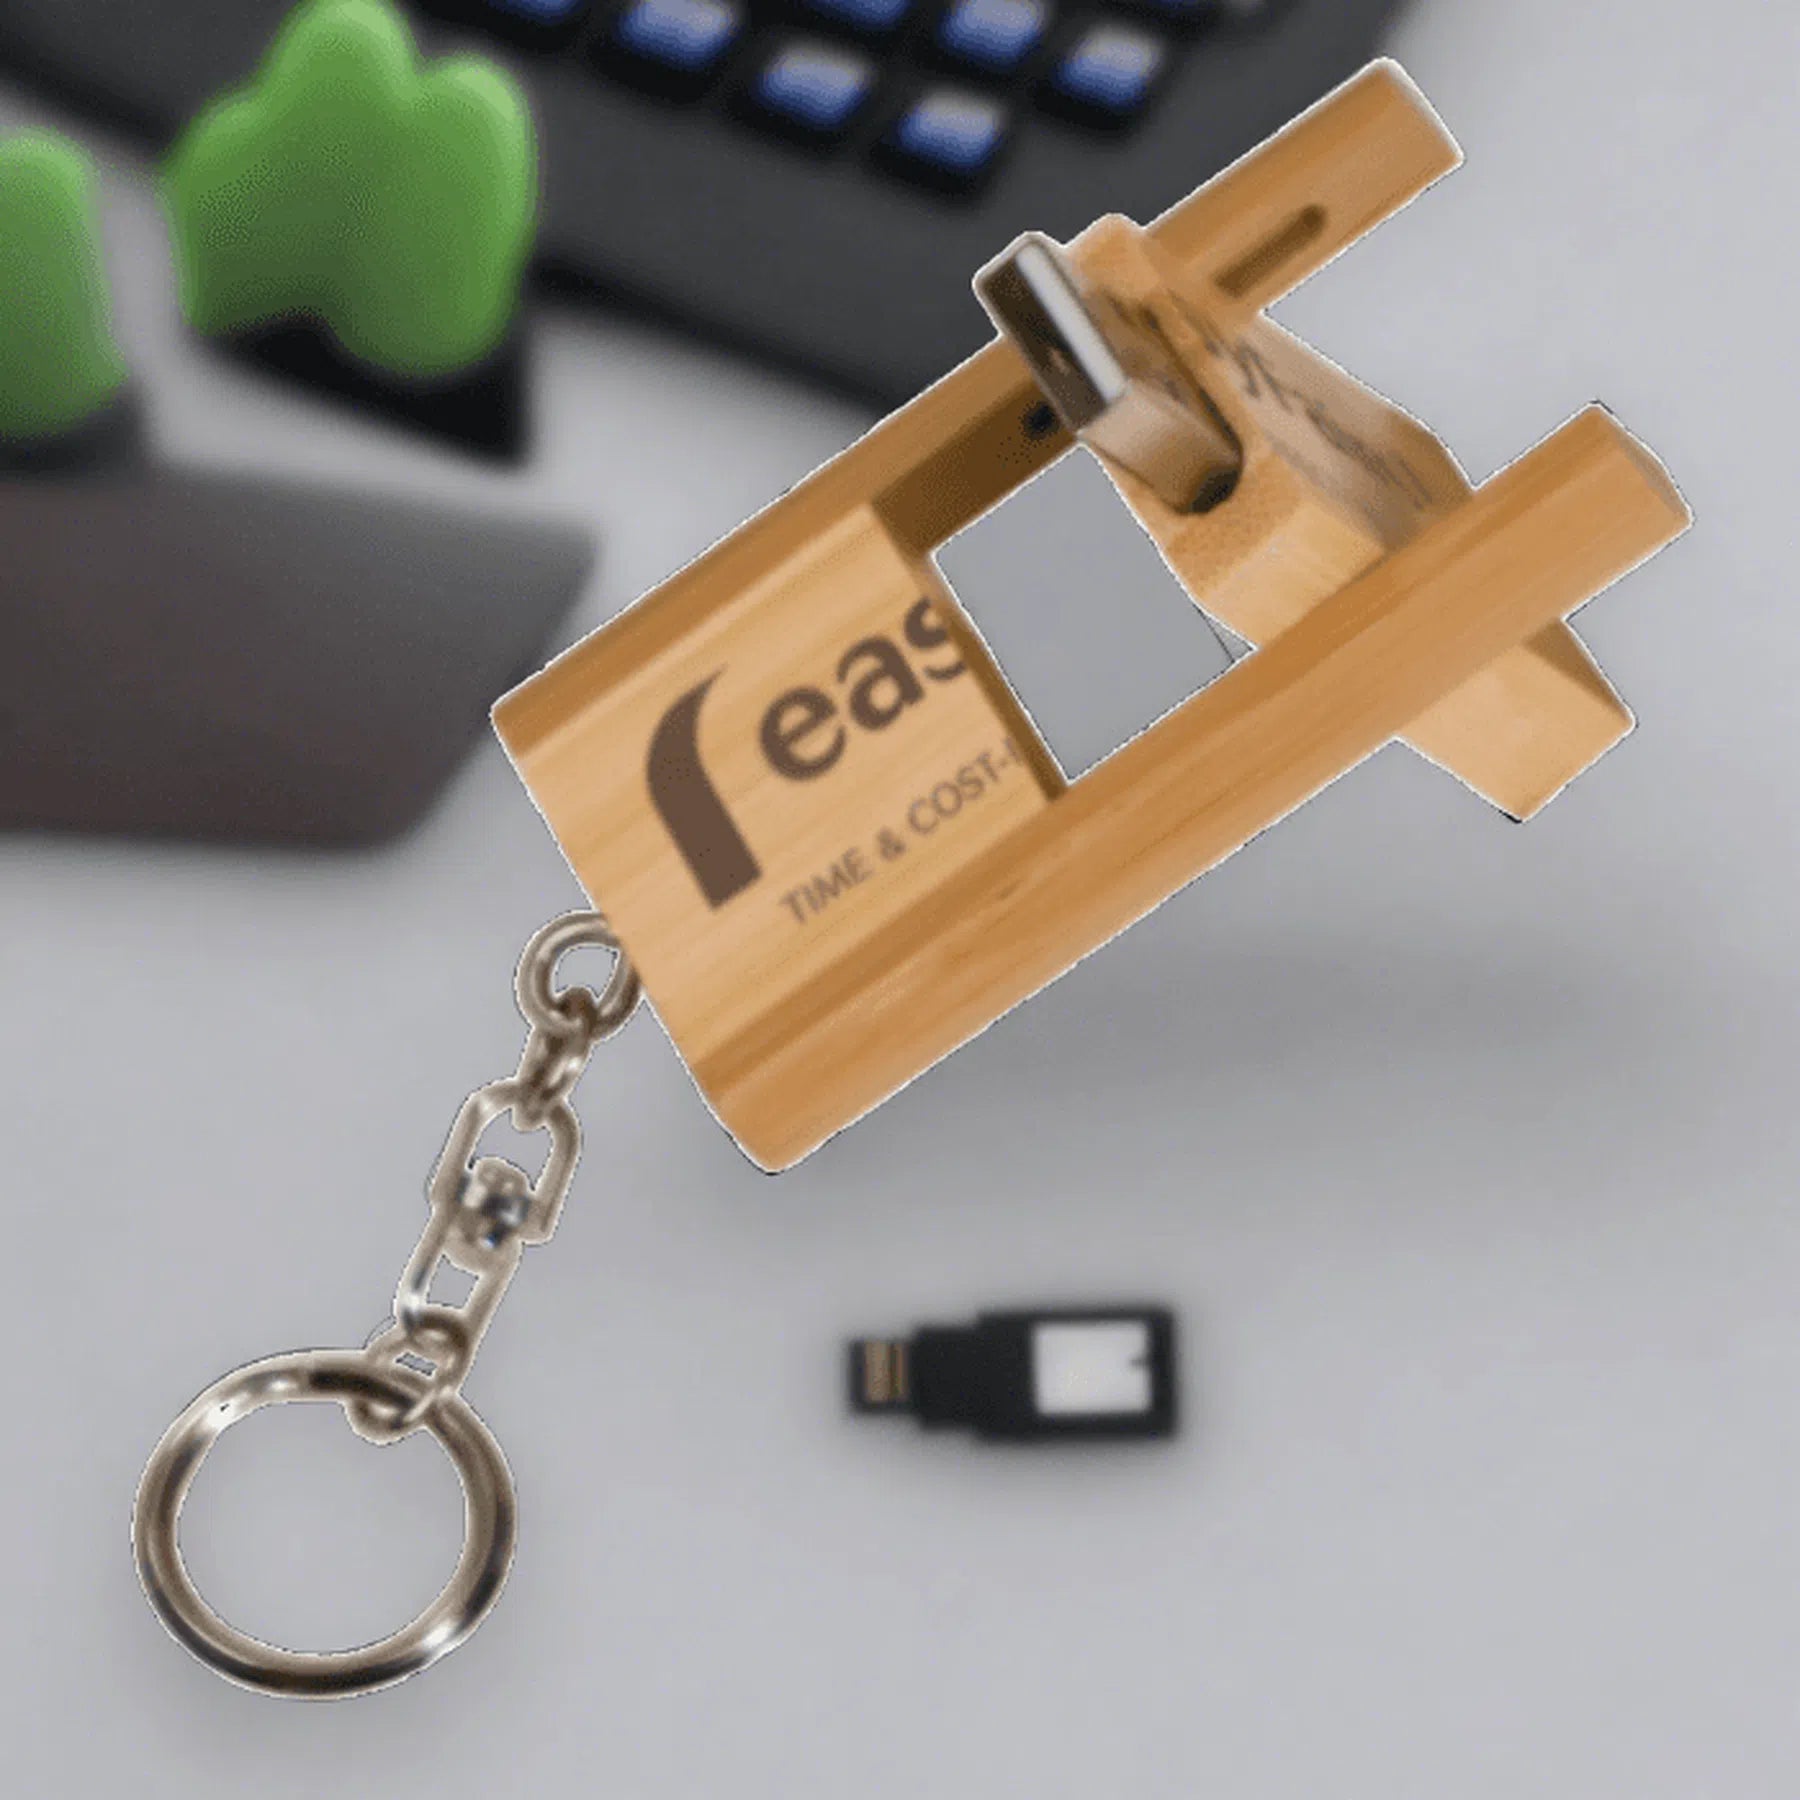 8GB Flip Style USB Flash Drive with Keychain